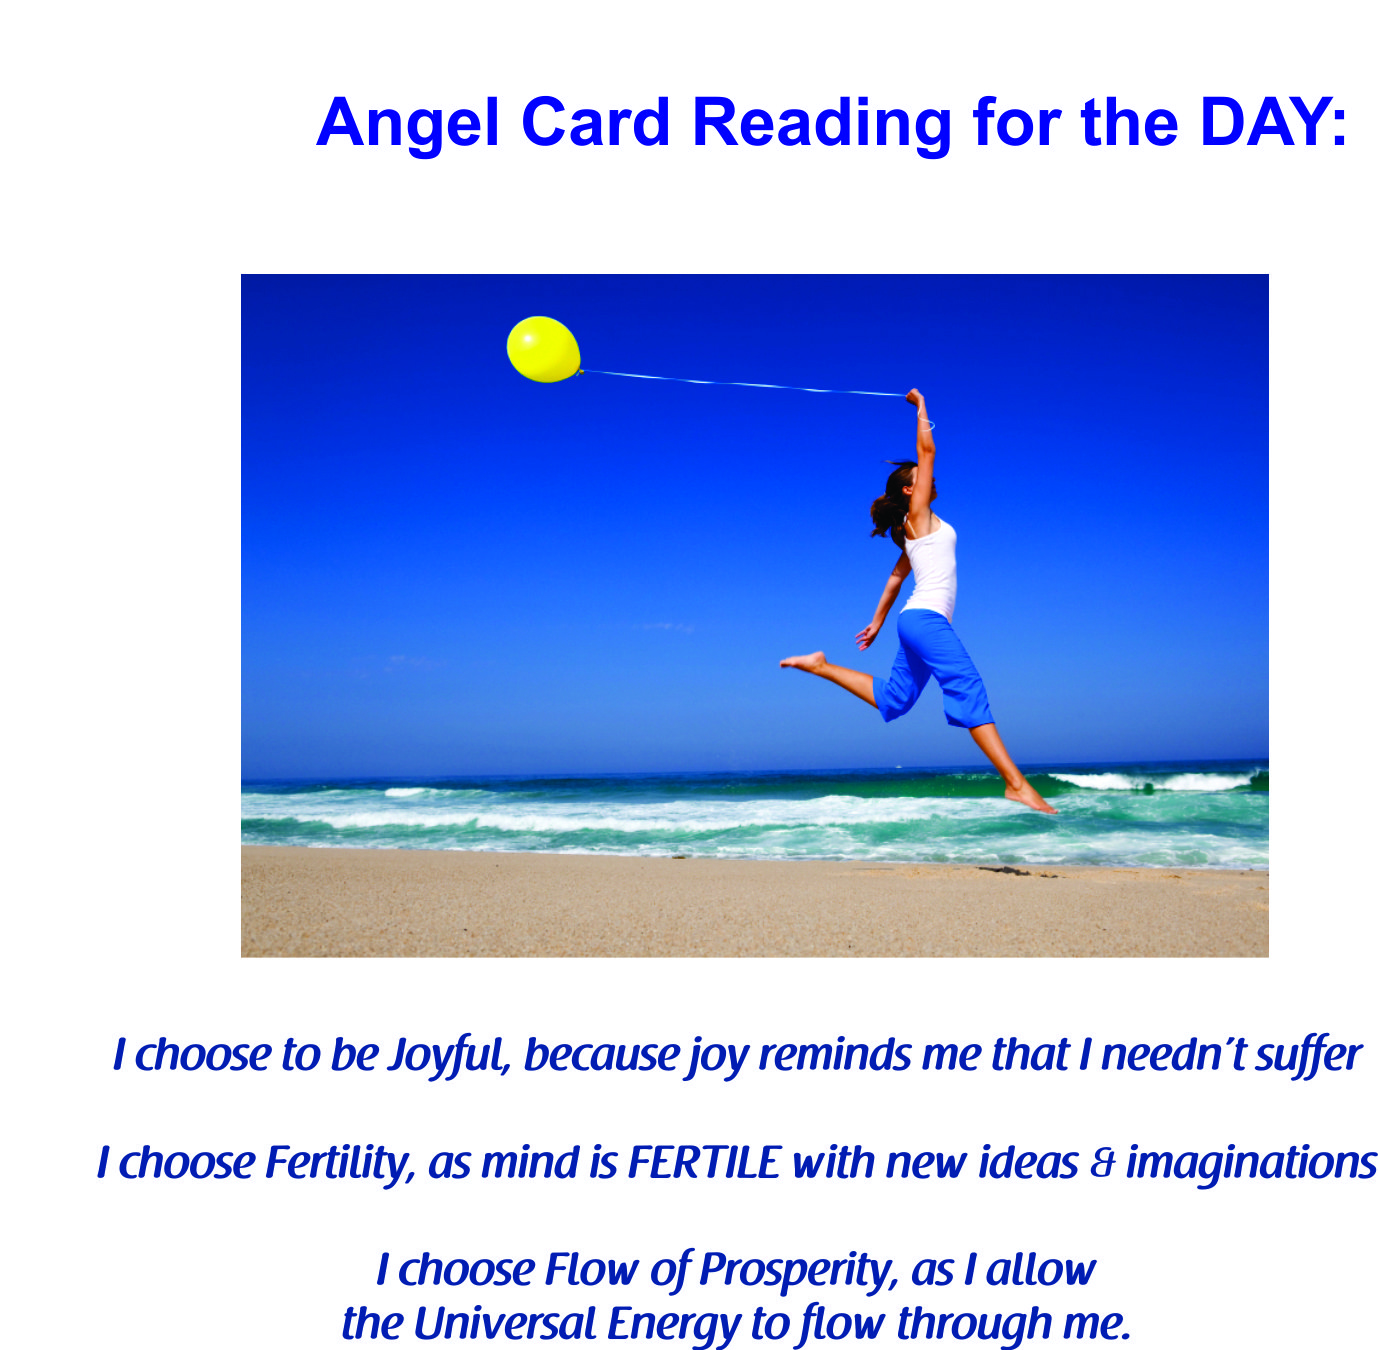 ANGEL CARD READING